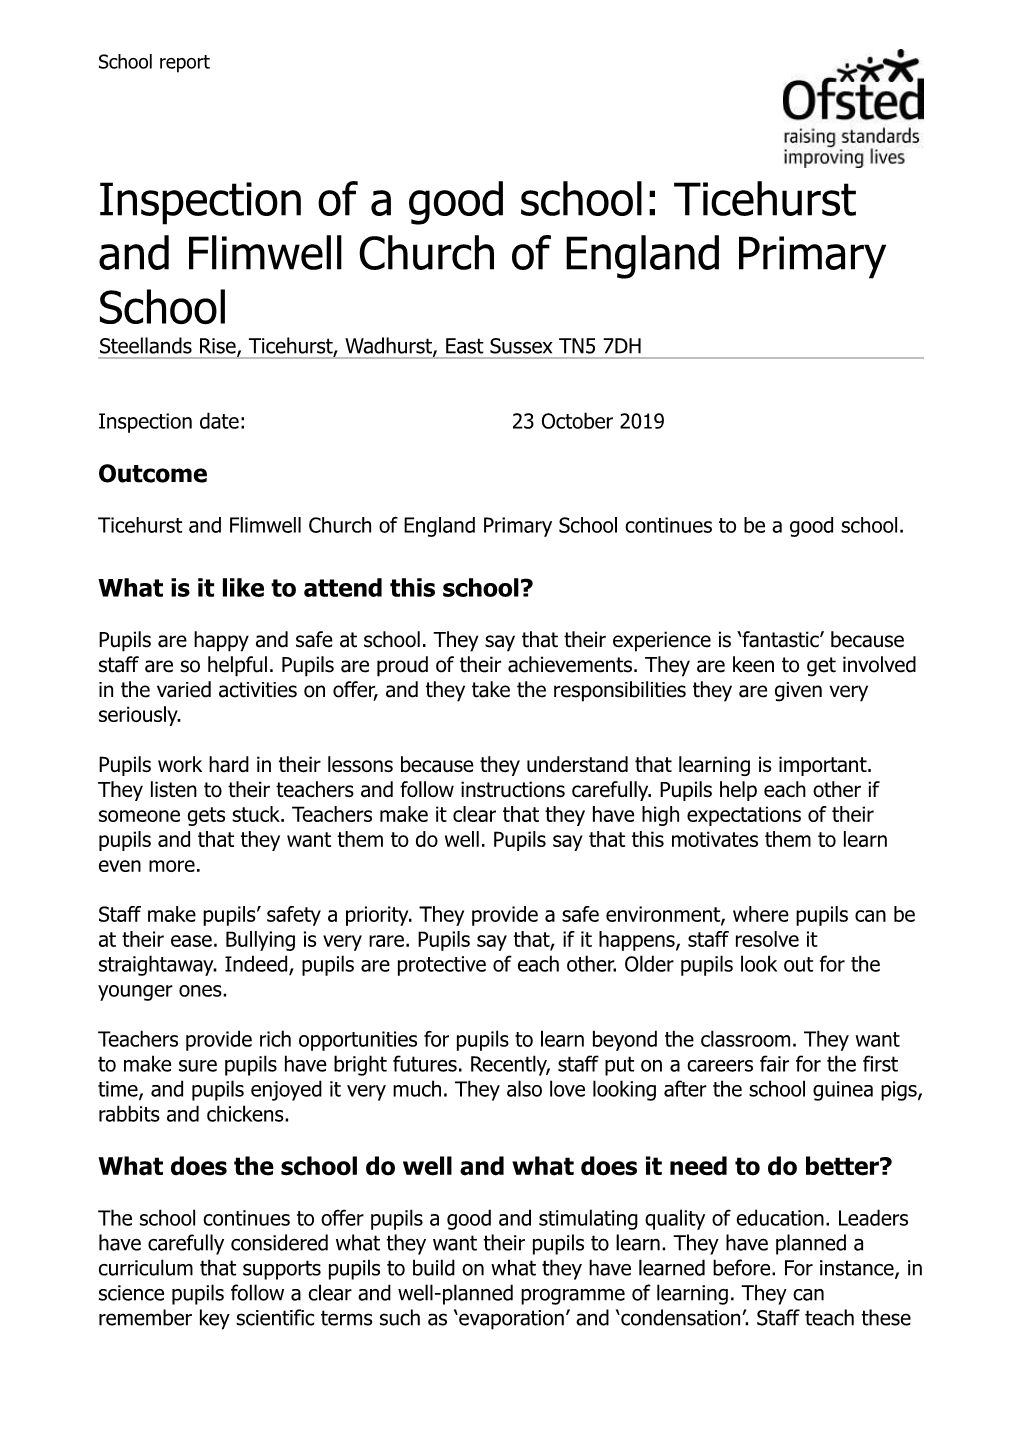 Ticehurst and Flimwell Church of England Primary School Steellands Rise, Ticehurst, Wadhurst, East Sussex TN5 7DH